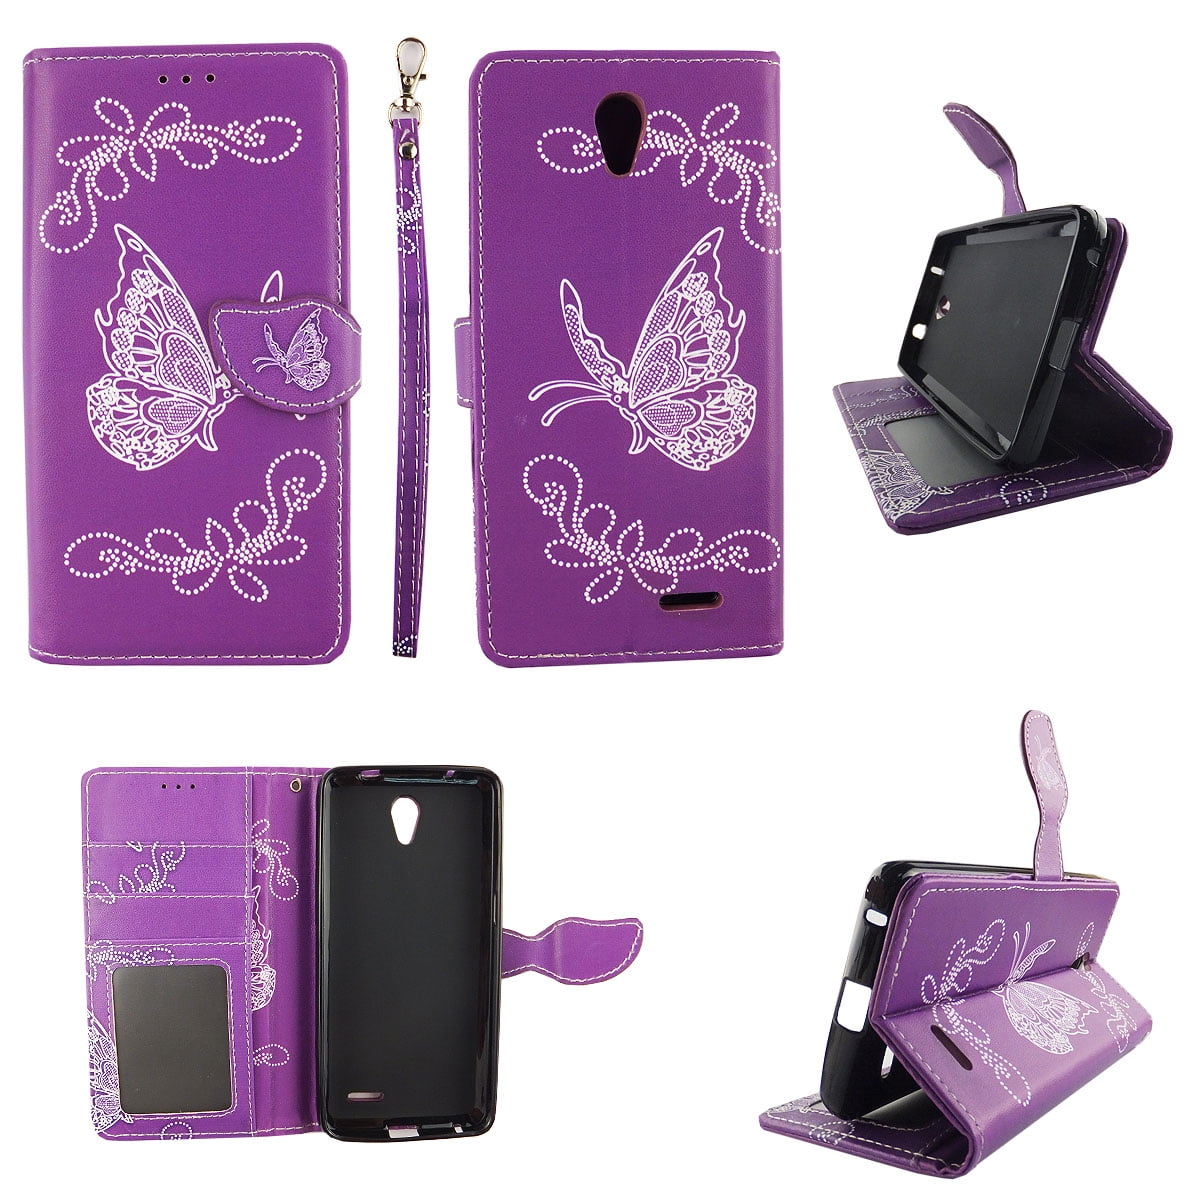 White Butterfly Purple Wallet Folio Case for ZTE Prestige Z9132 Avid Plus  Z828 Fashion Flip PU Leather Cover Card Cash Slots & Stand